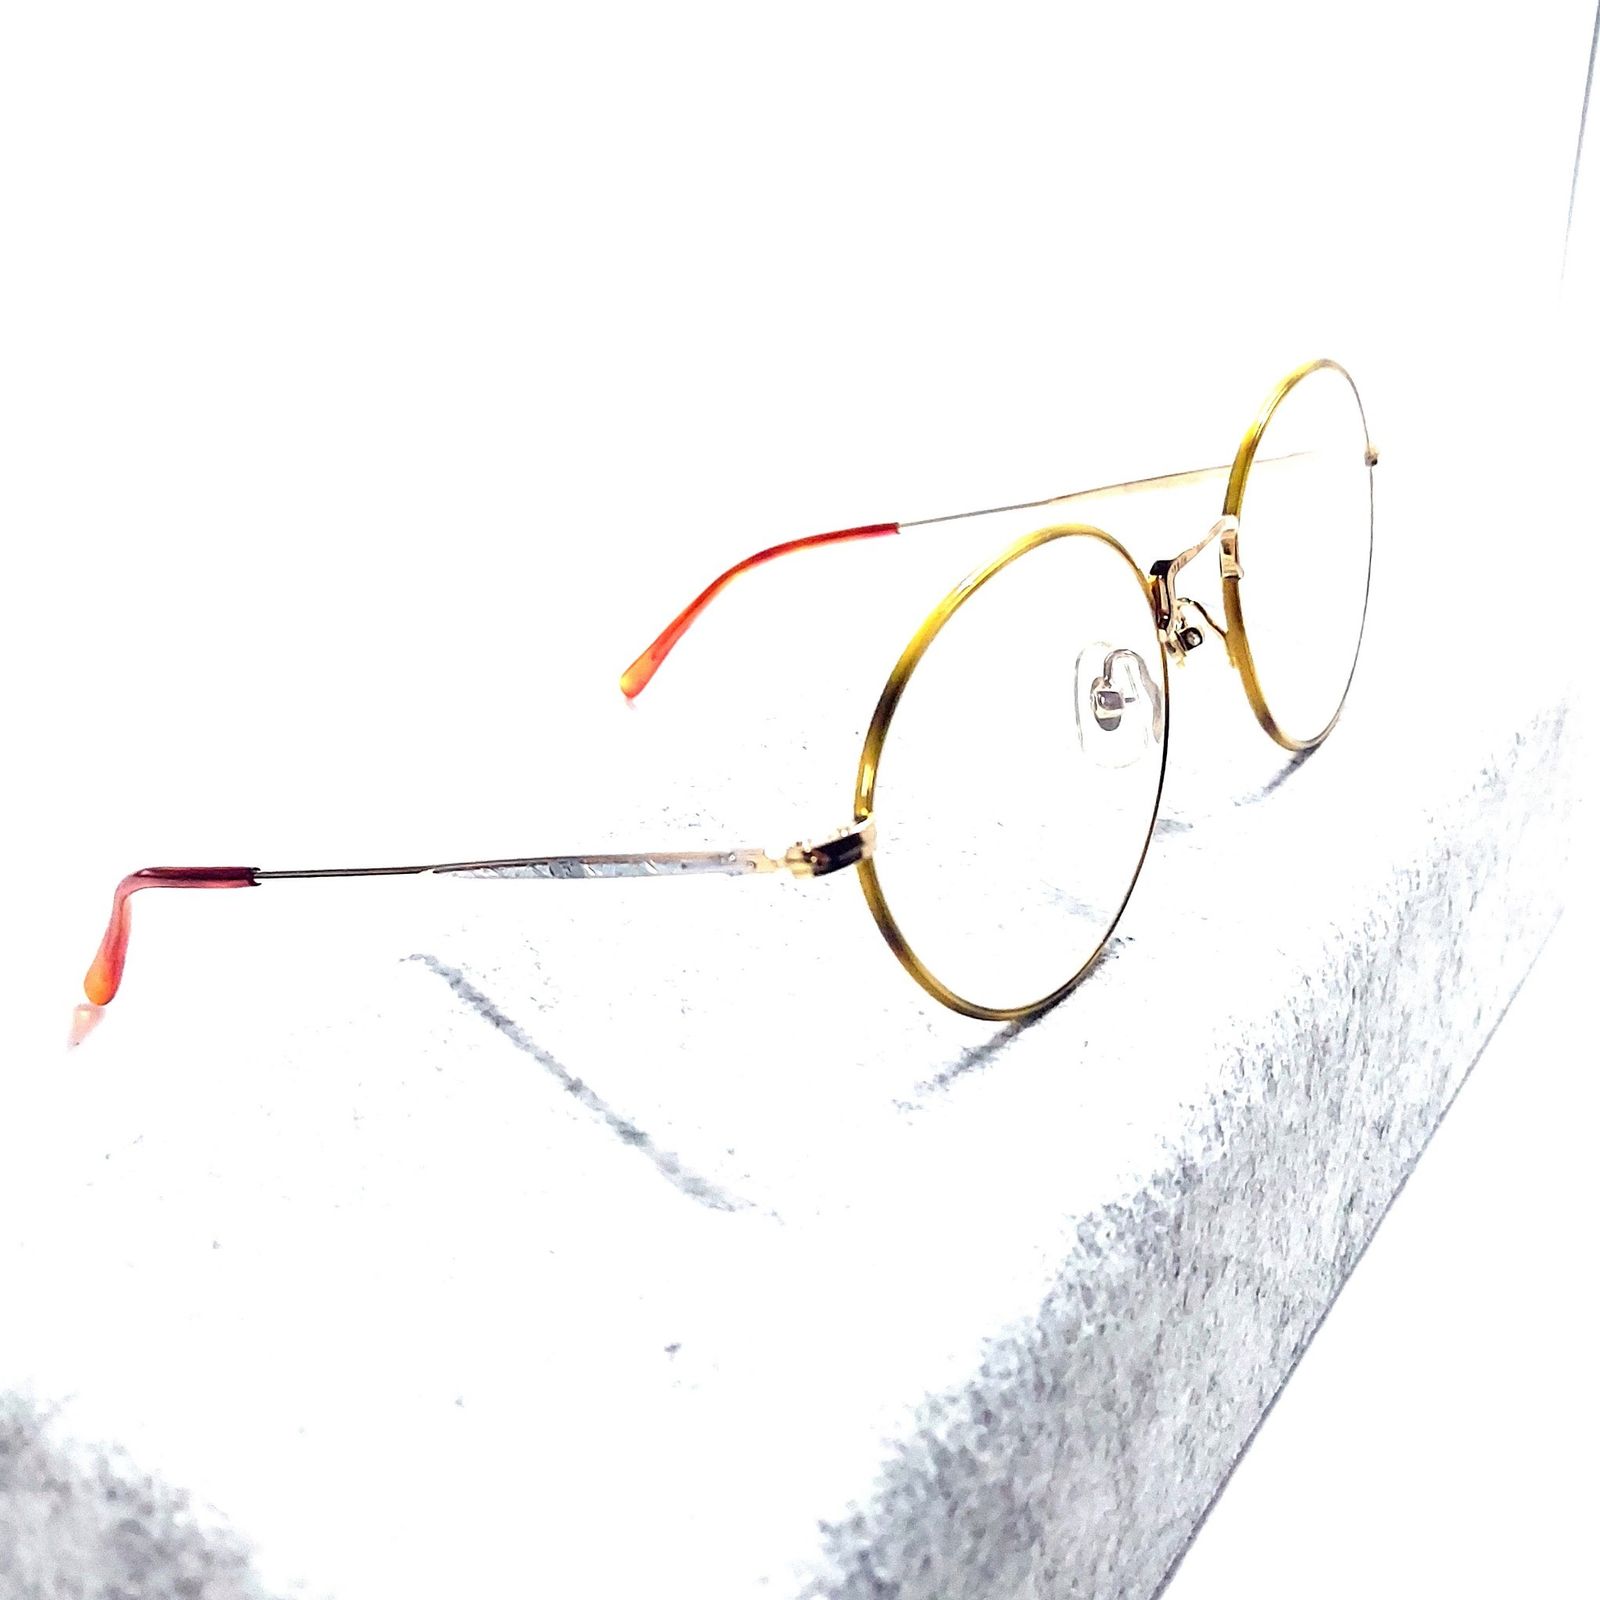 No.928-メガネ FACONNABLE【フレームのみ価格】 - サングラス/メガネ